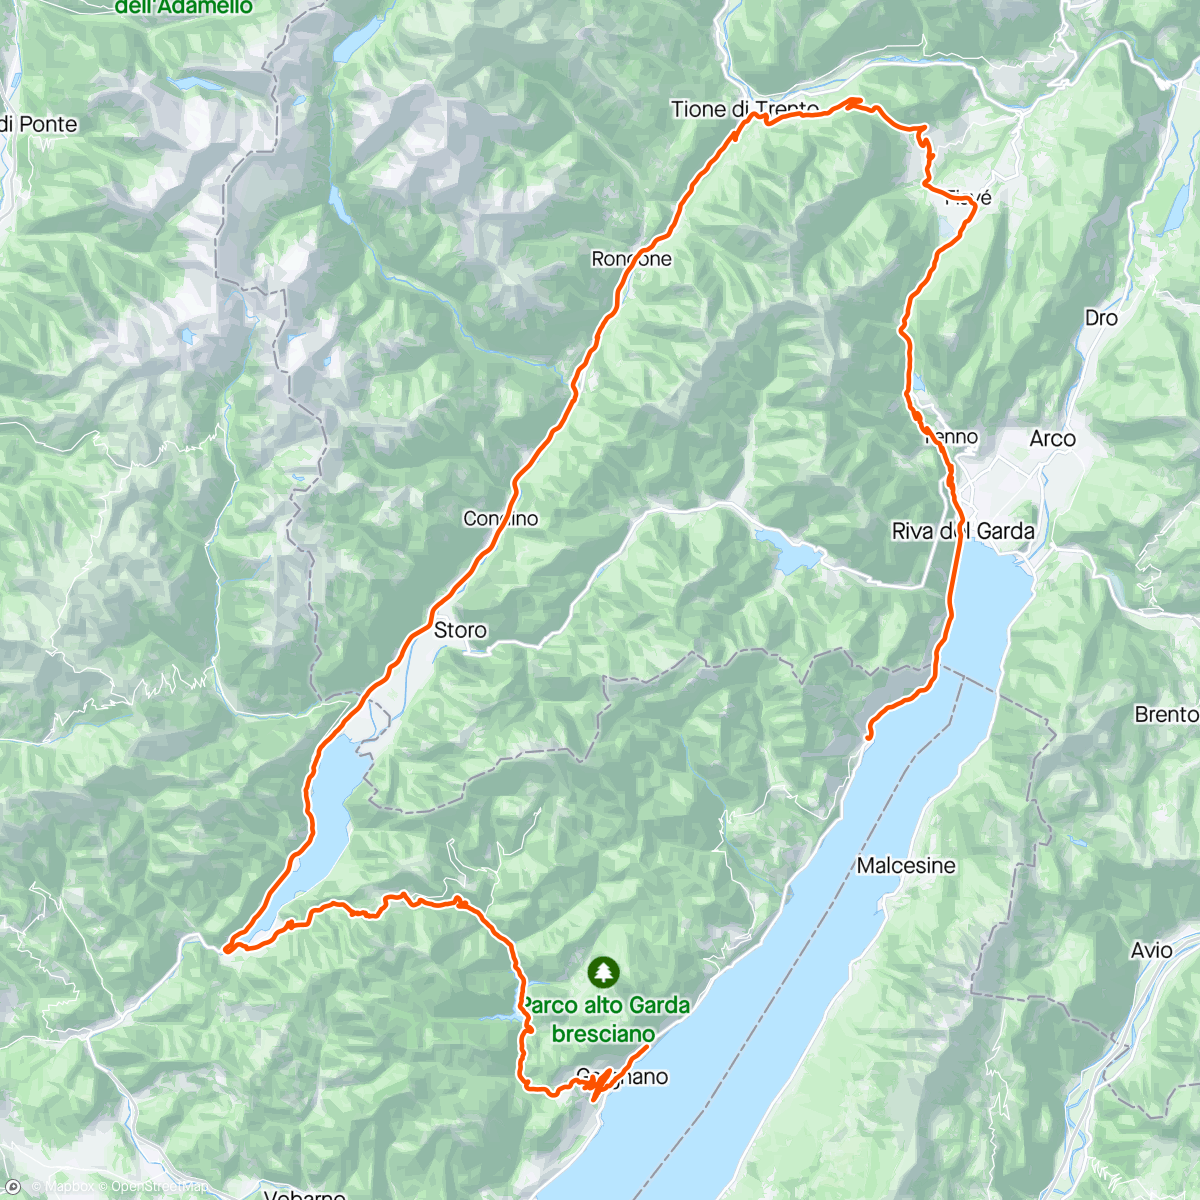 Map of the activity, Giro sopra Garda co l’amico Raumo